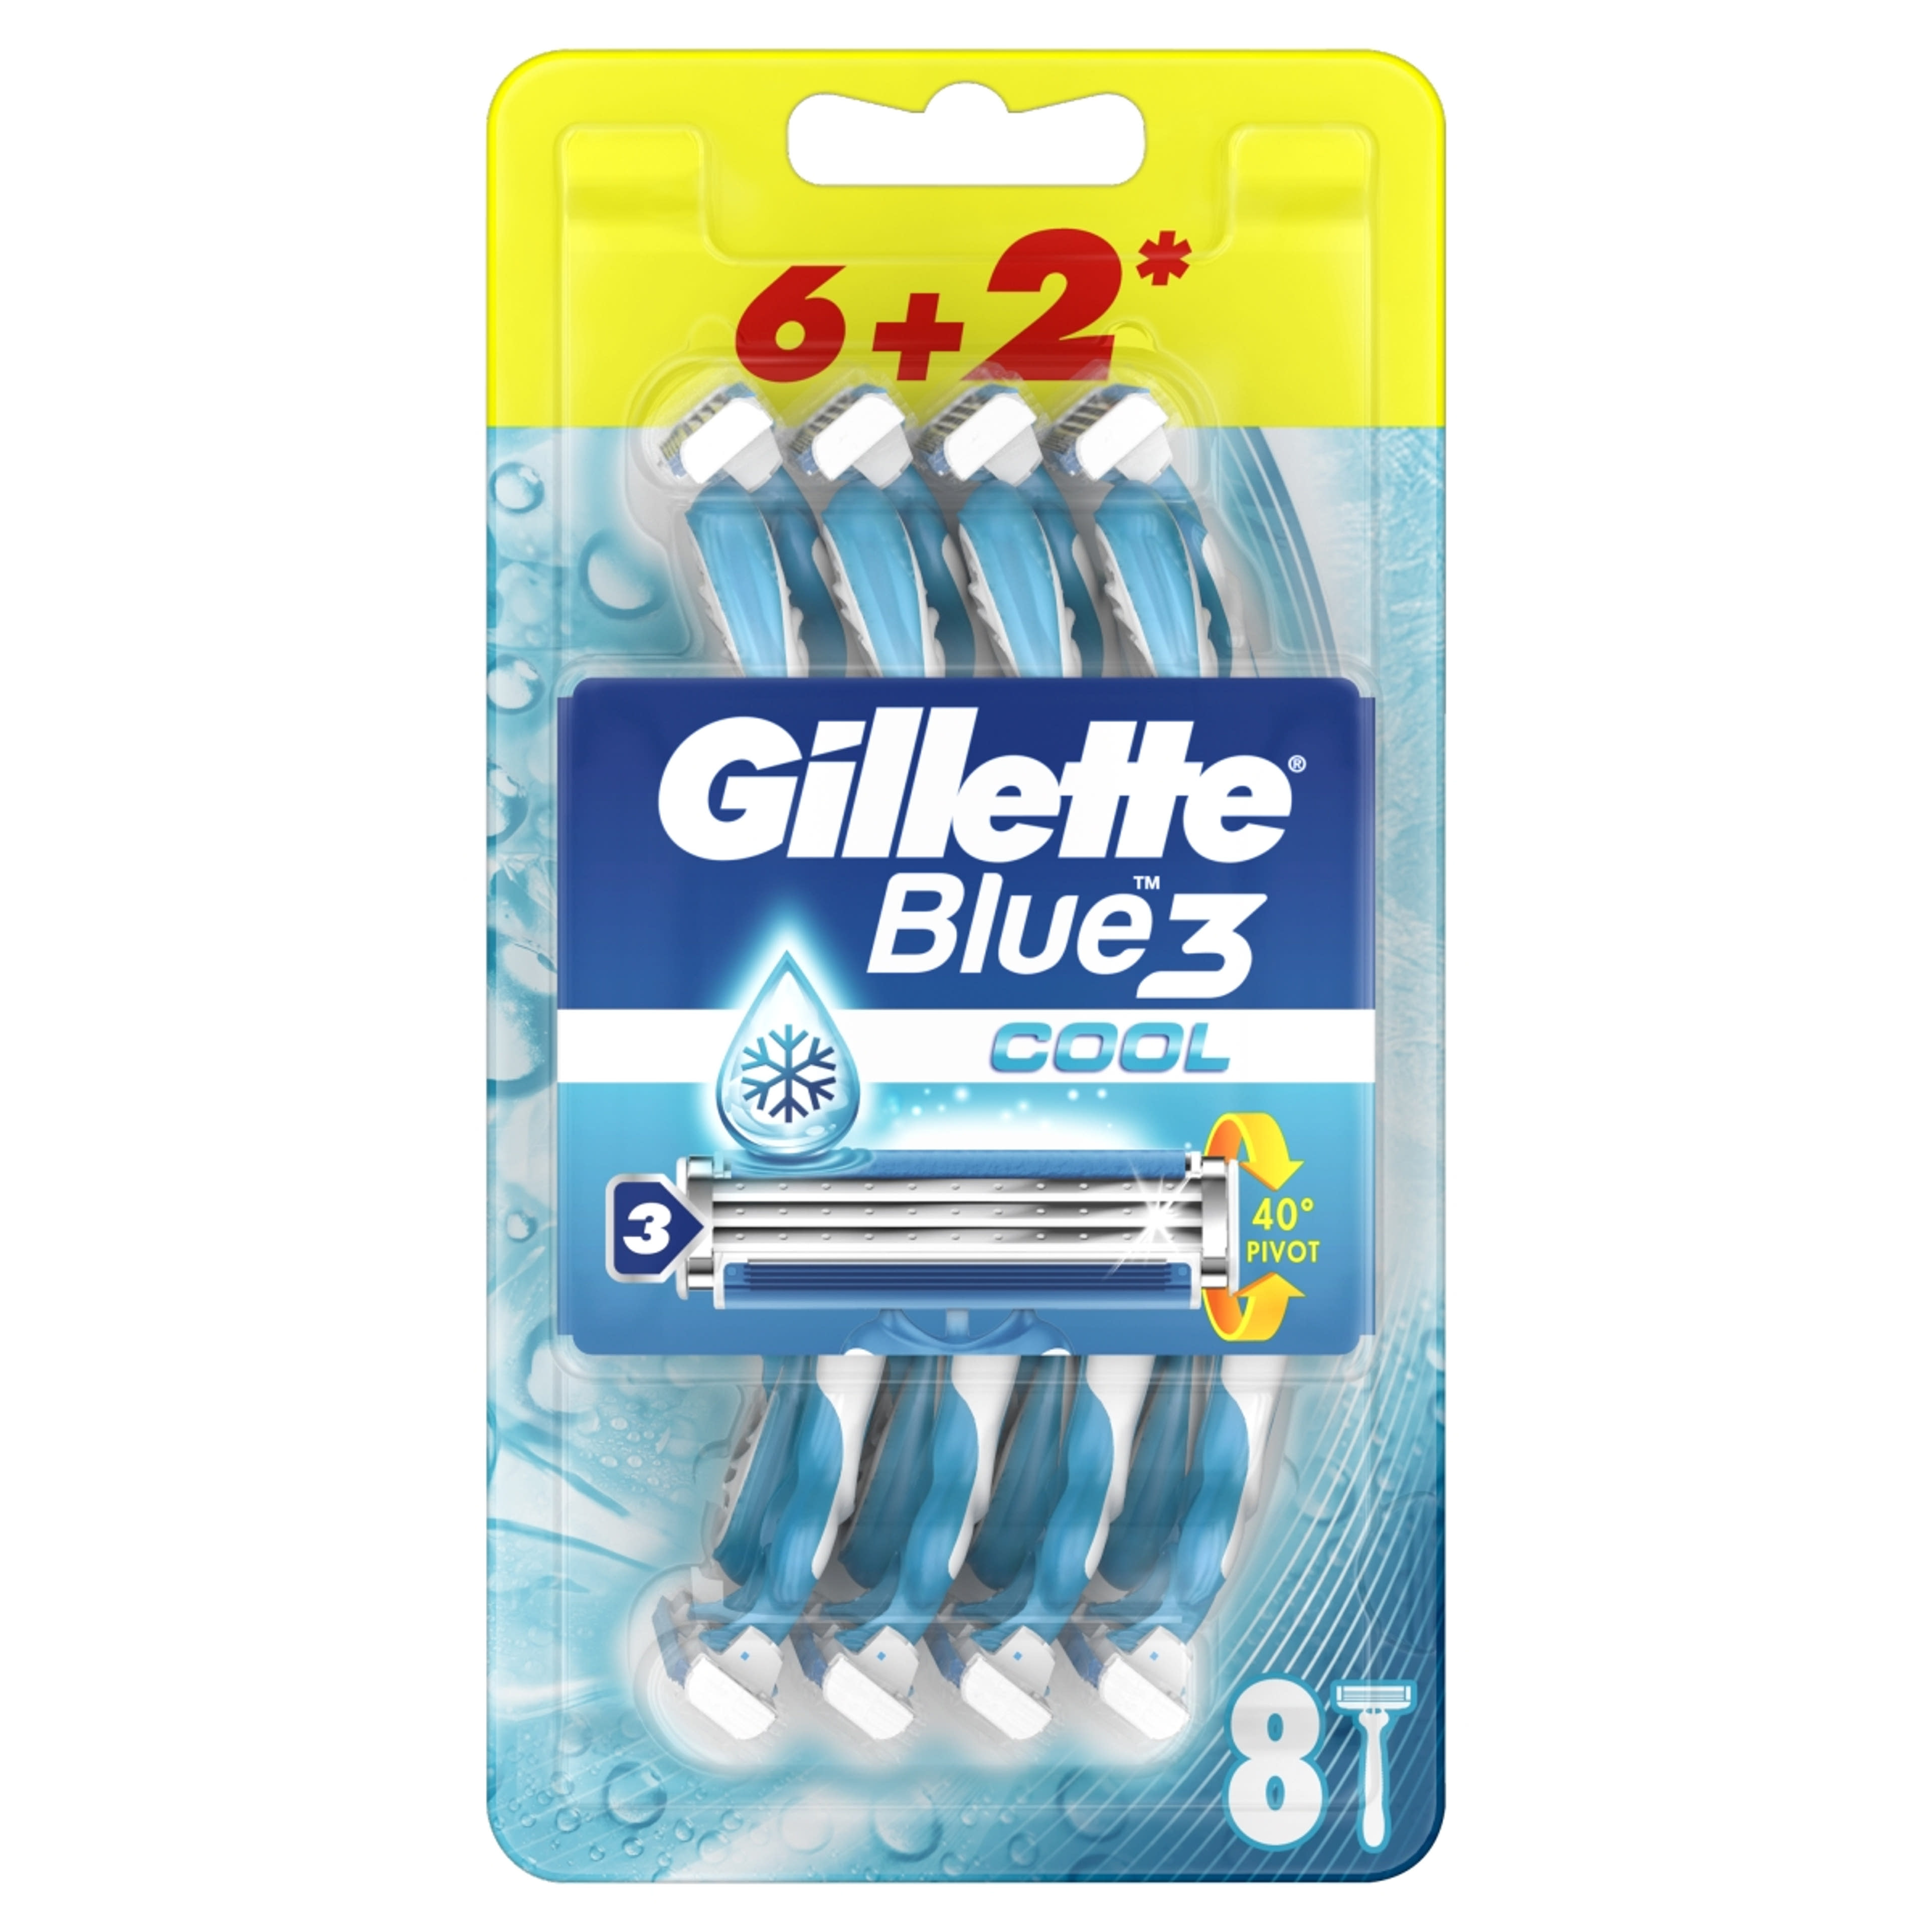 Gillette blue3 cool eldobható borotva 6 + 2 - 8 db-1